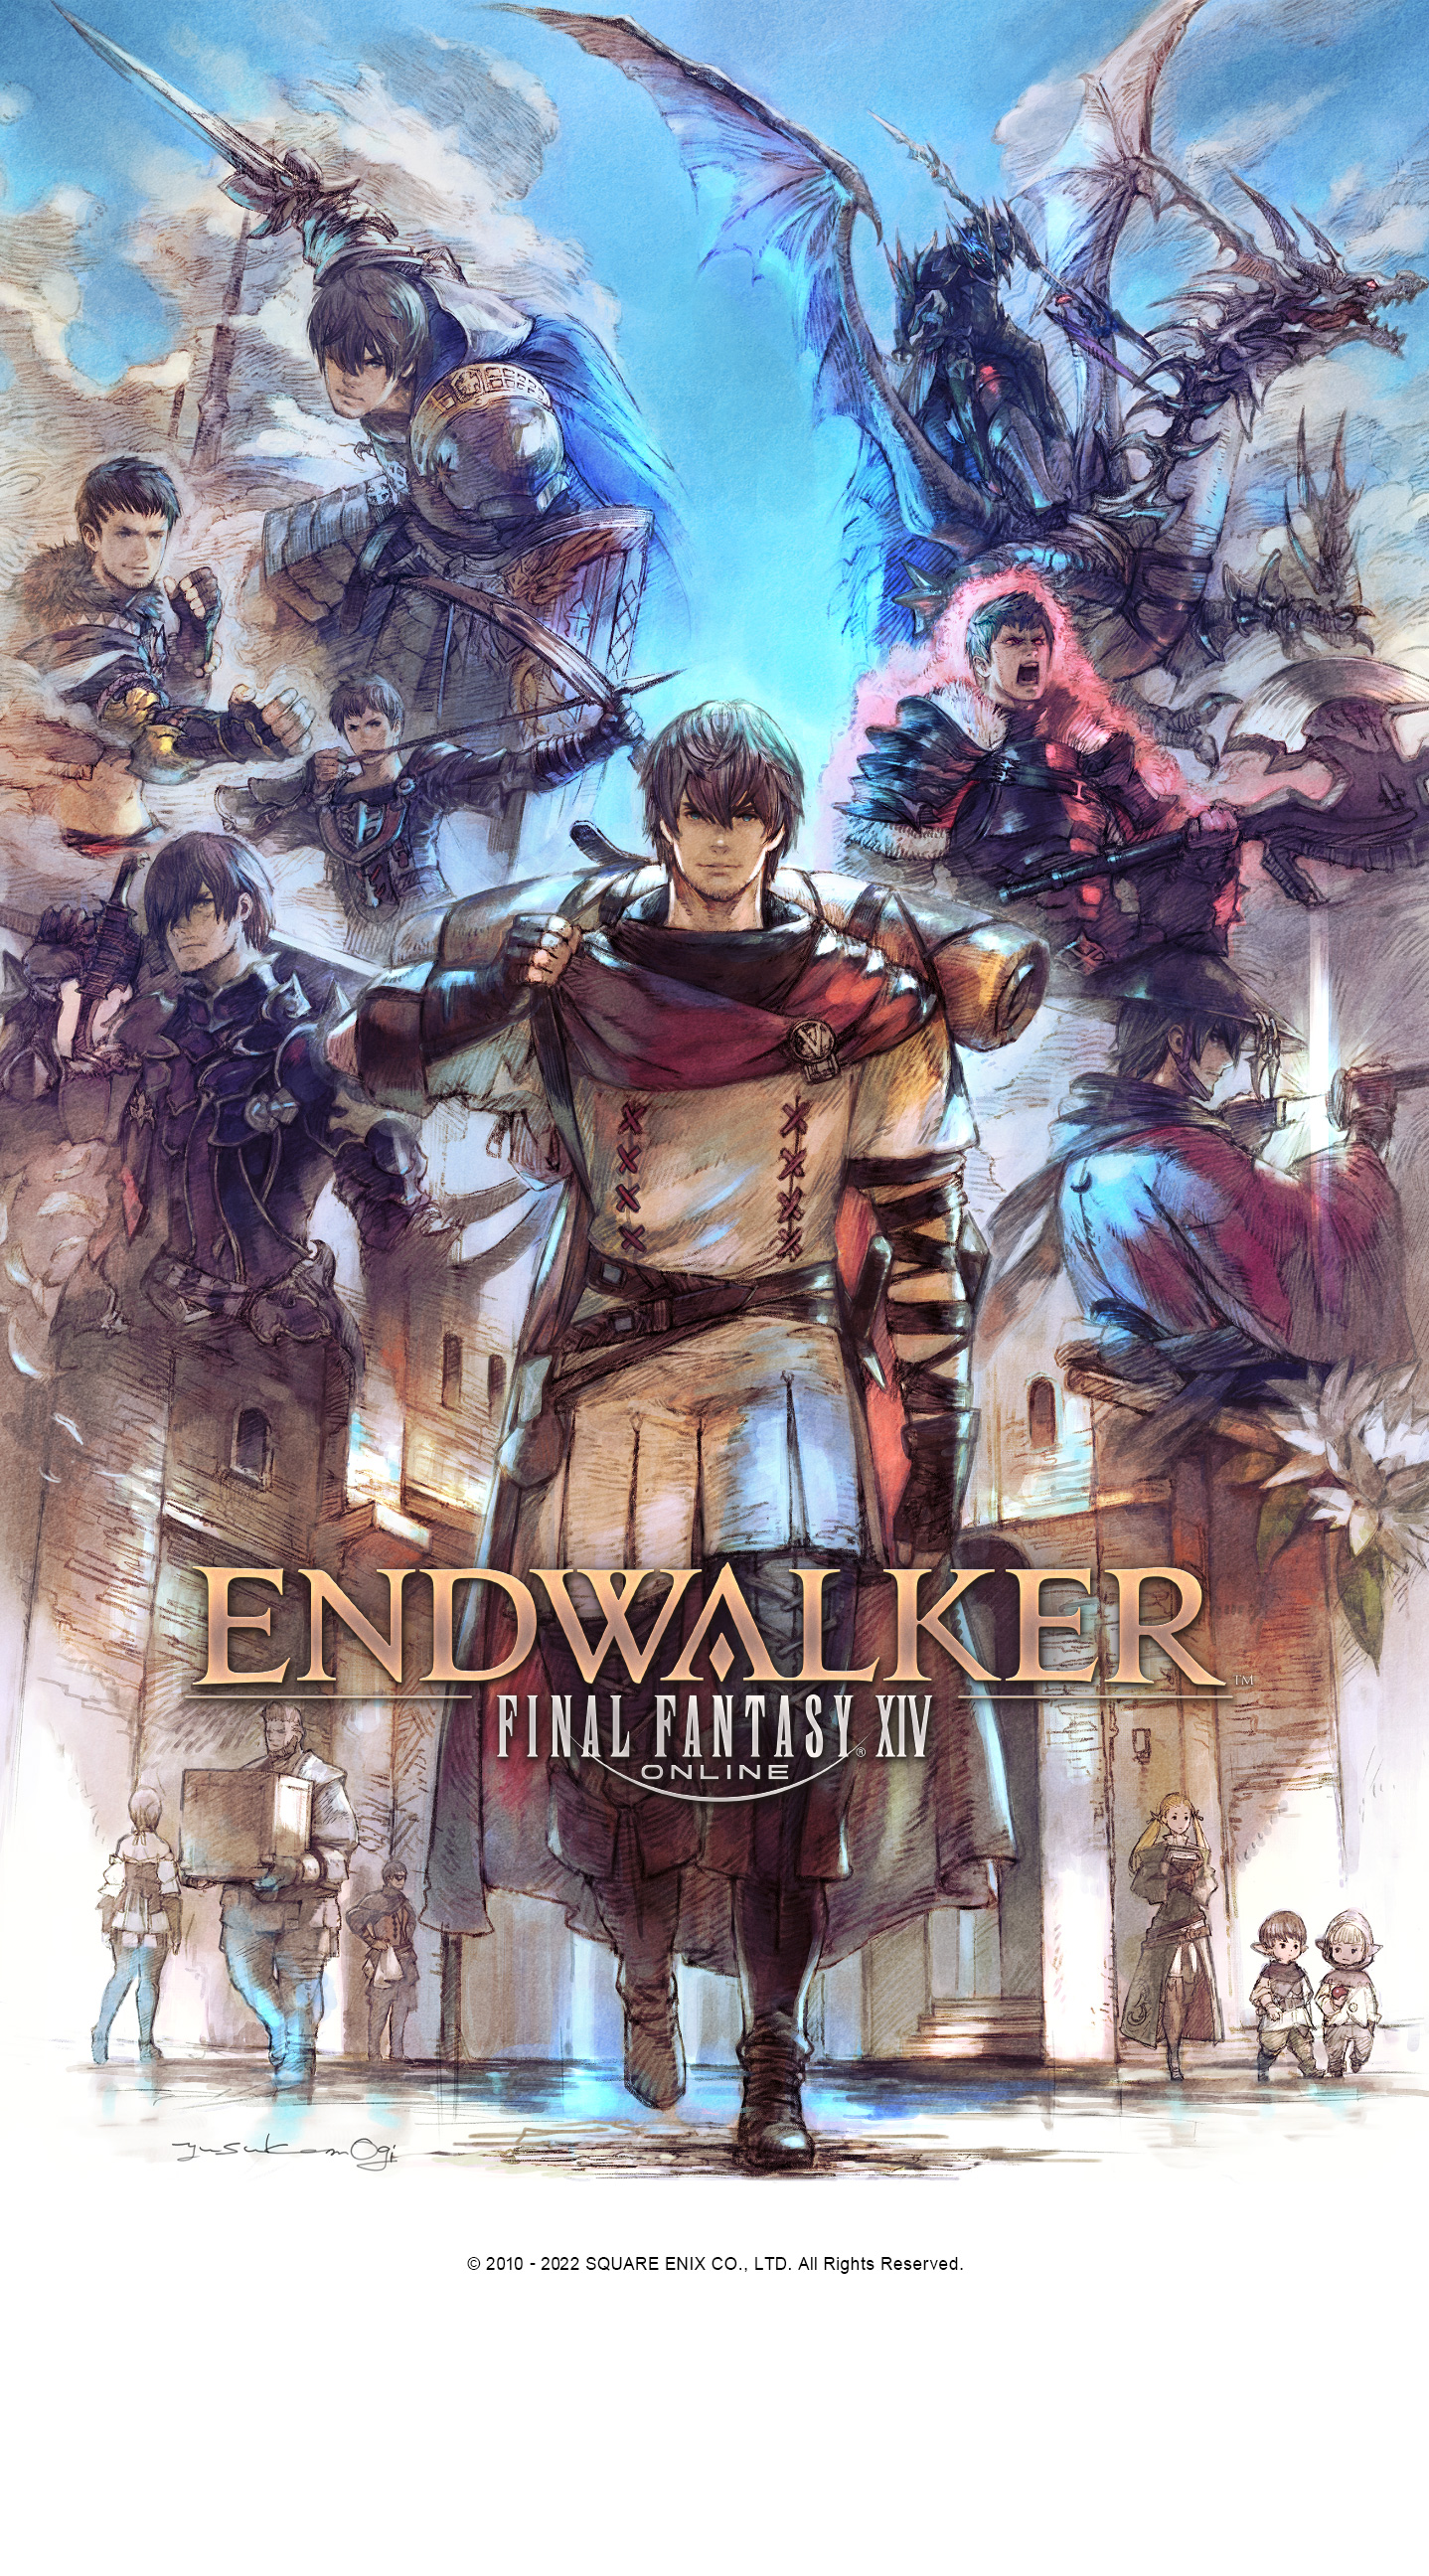 Final Fantasy XIV Endwalker Wallpapers  Top 25 Best Final Fantasy XIV  Endwalker Backgrounds Download